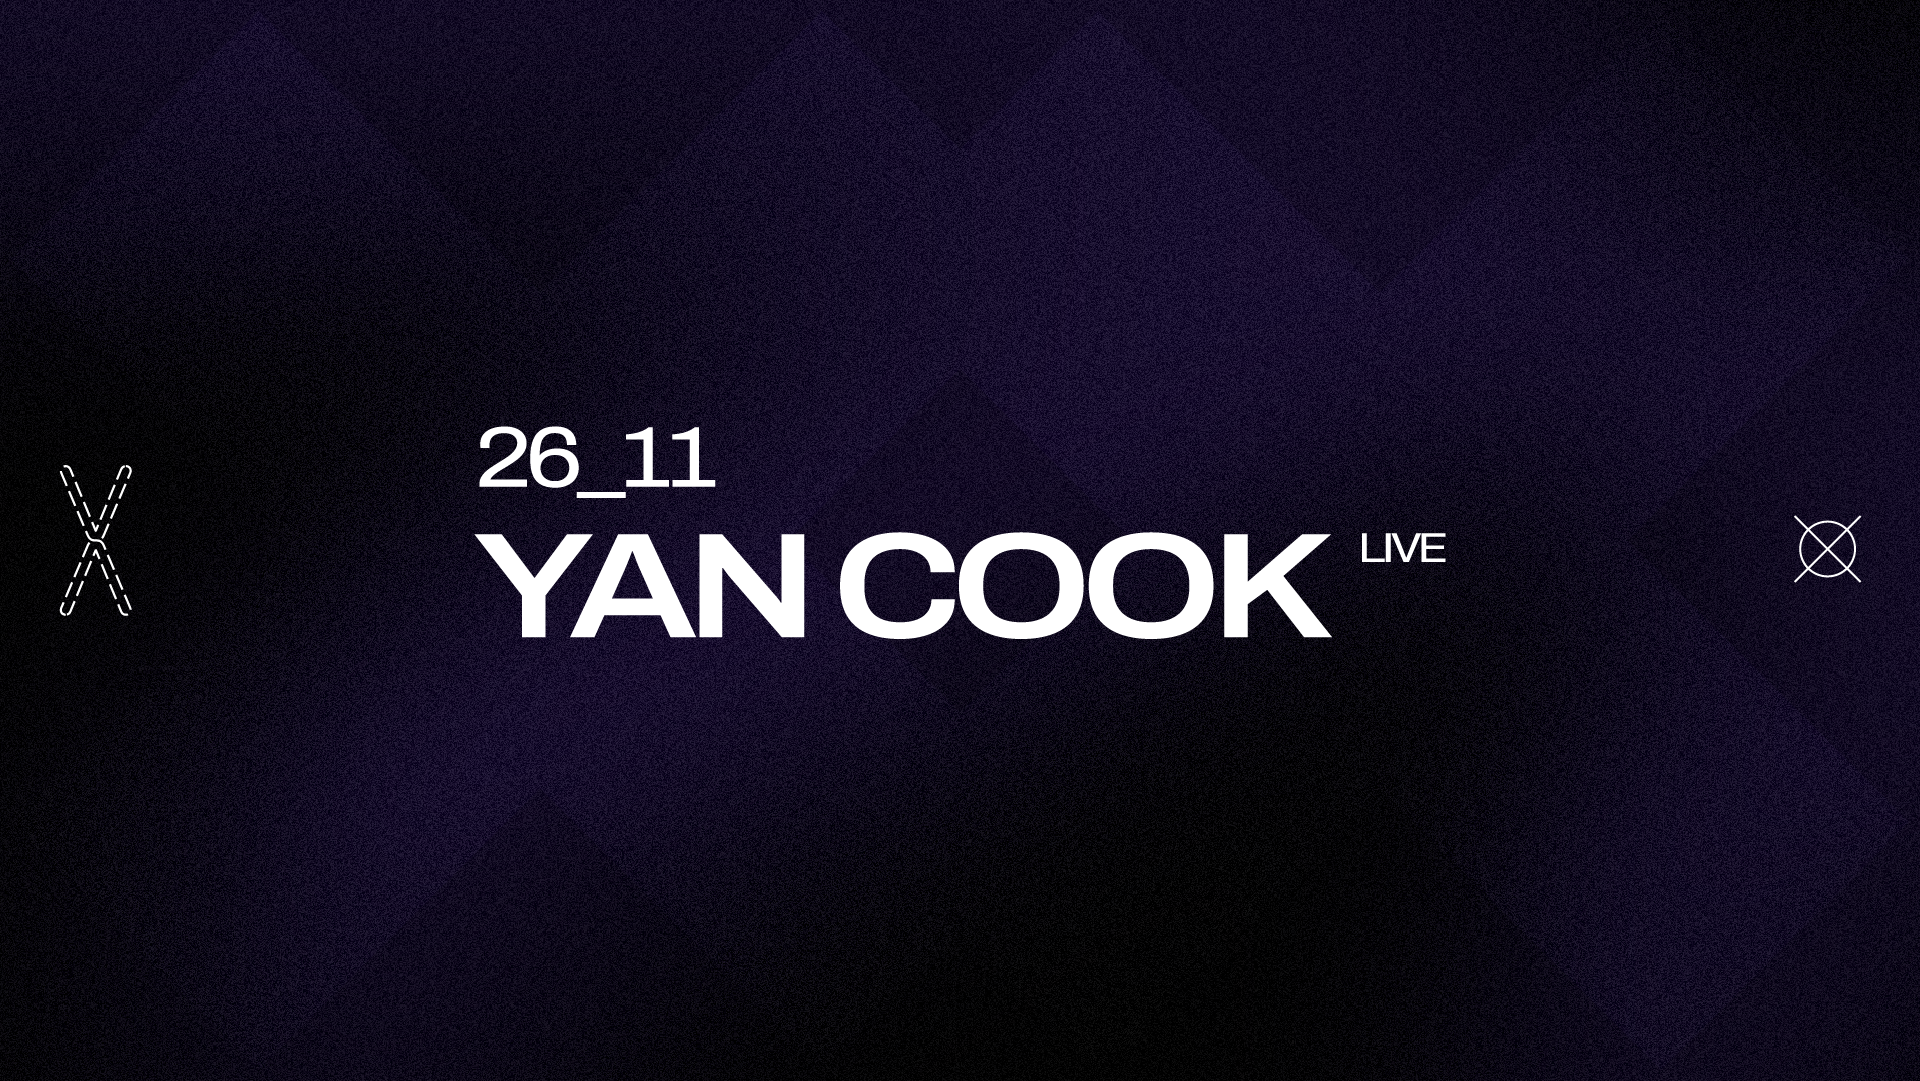 VИDЯPΛSS pres. Yan Cook LIVE - Página frontal